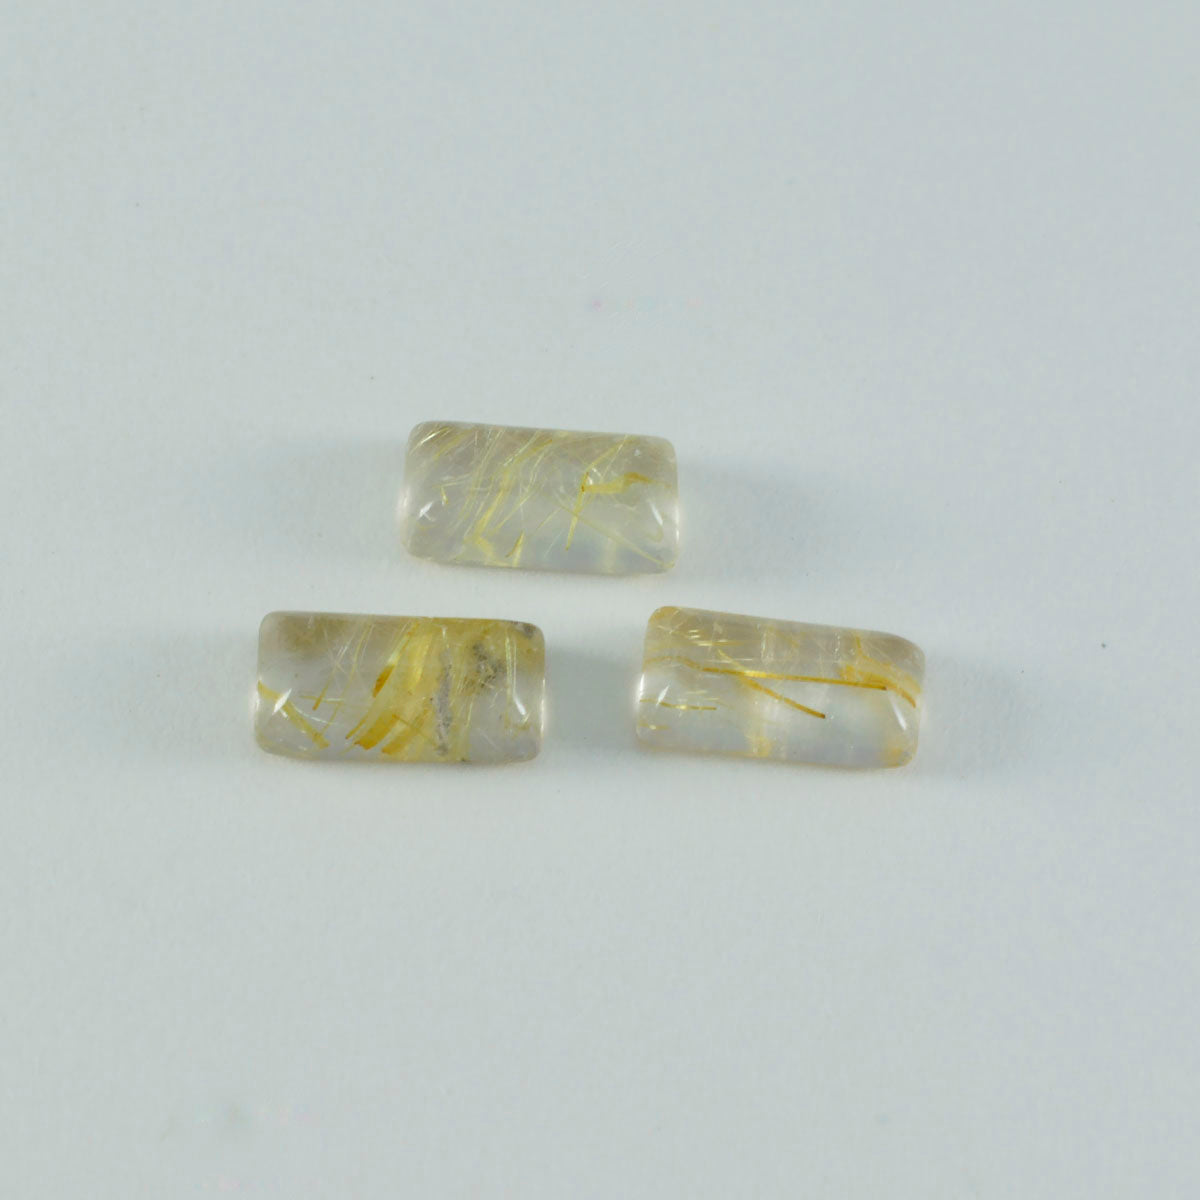 Riyogems 1PC Multi Rutile Quartz Cabochon 6x12 mm Baguett Shape A+ Quality Loose Stone